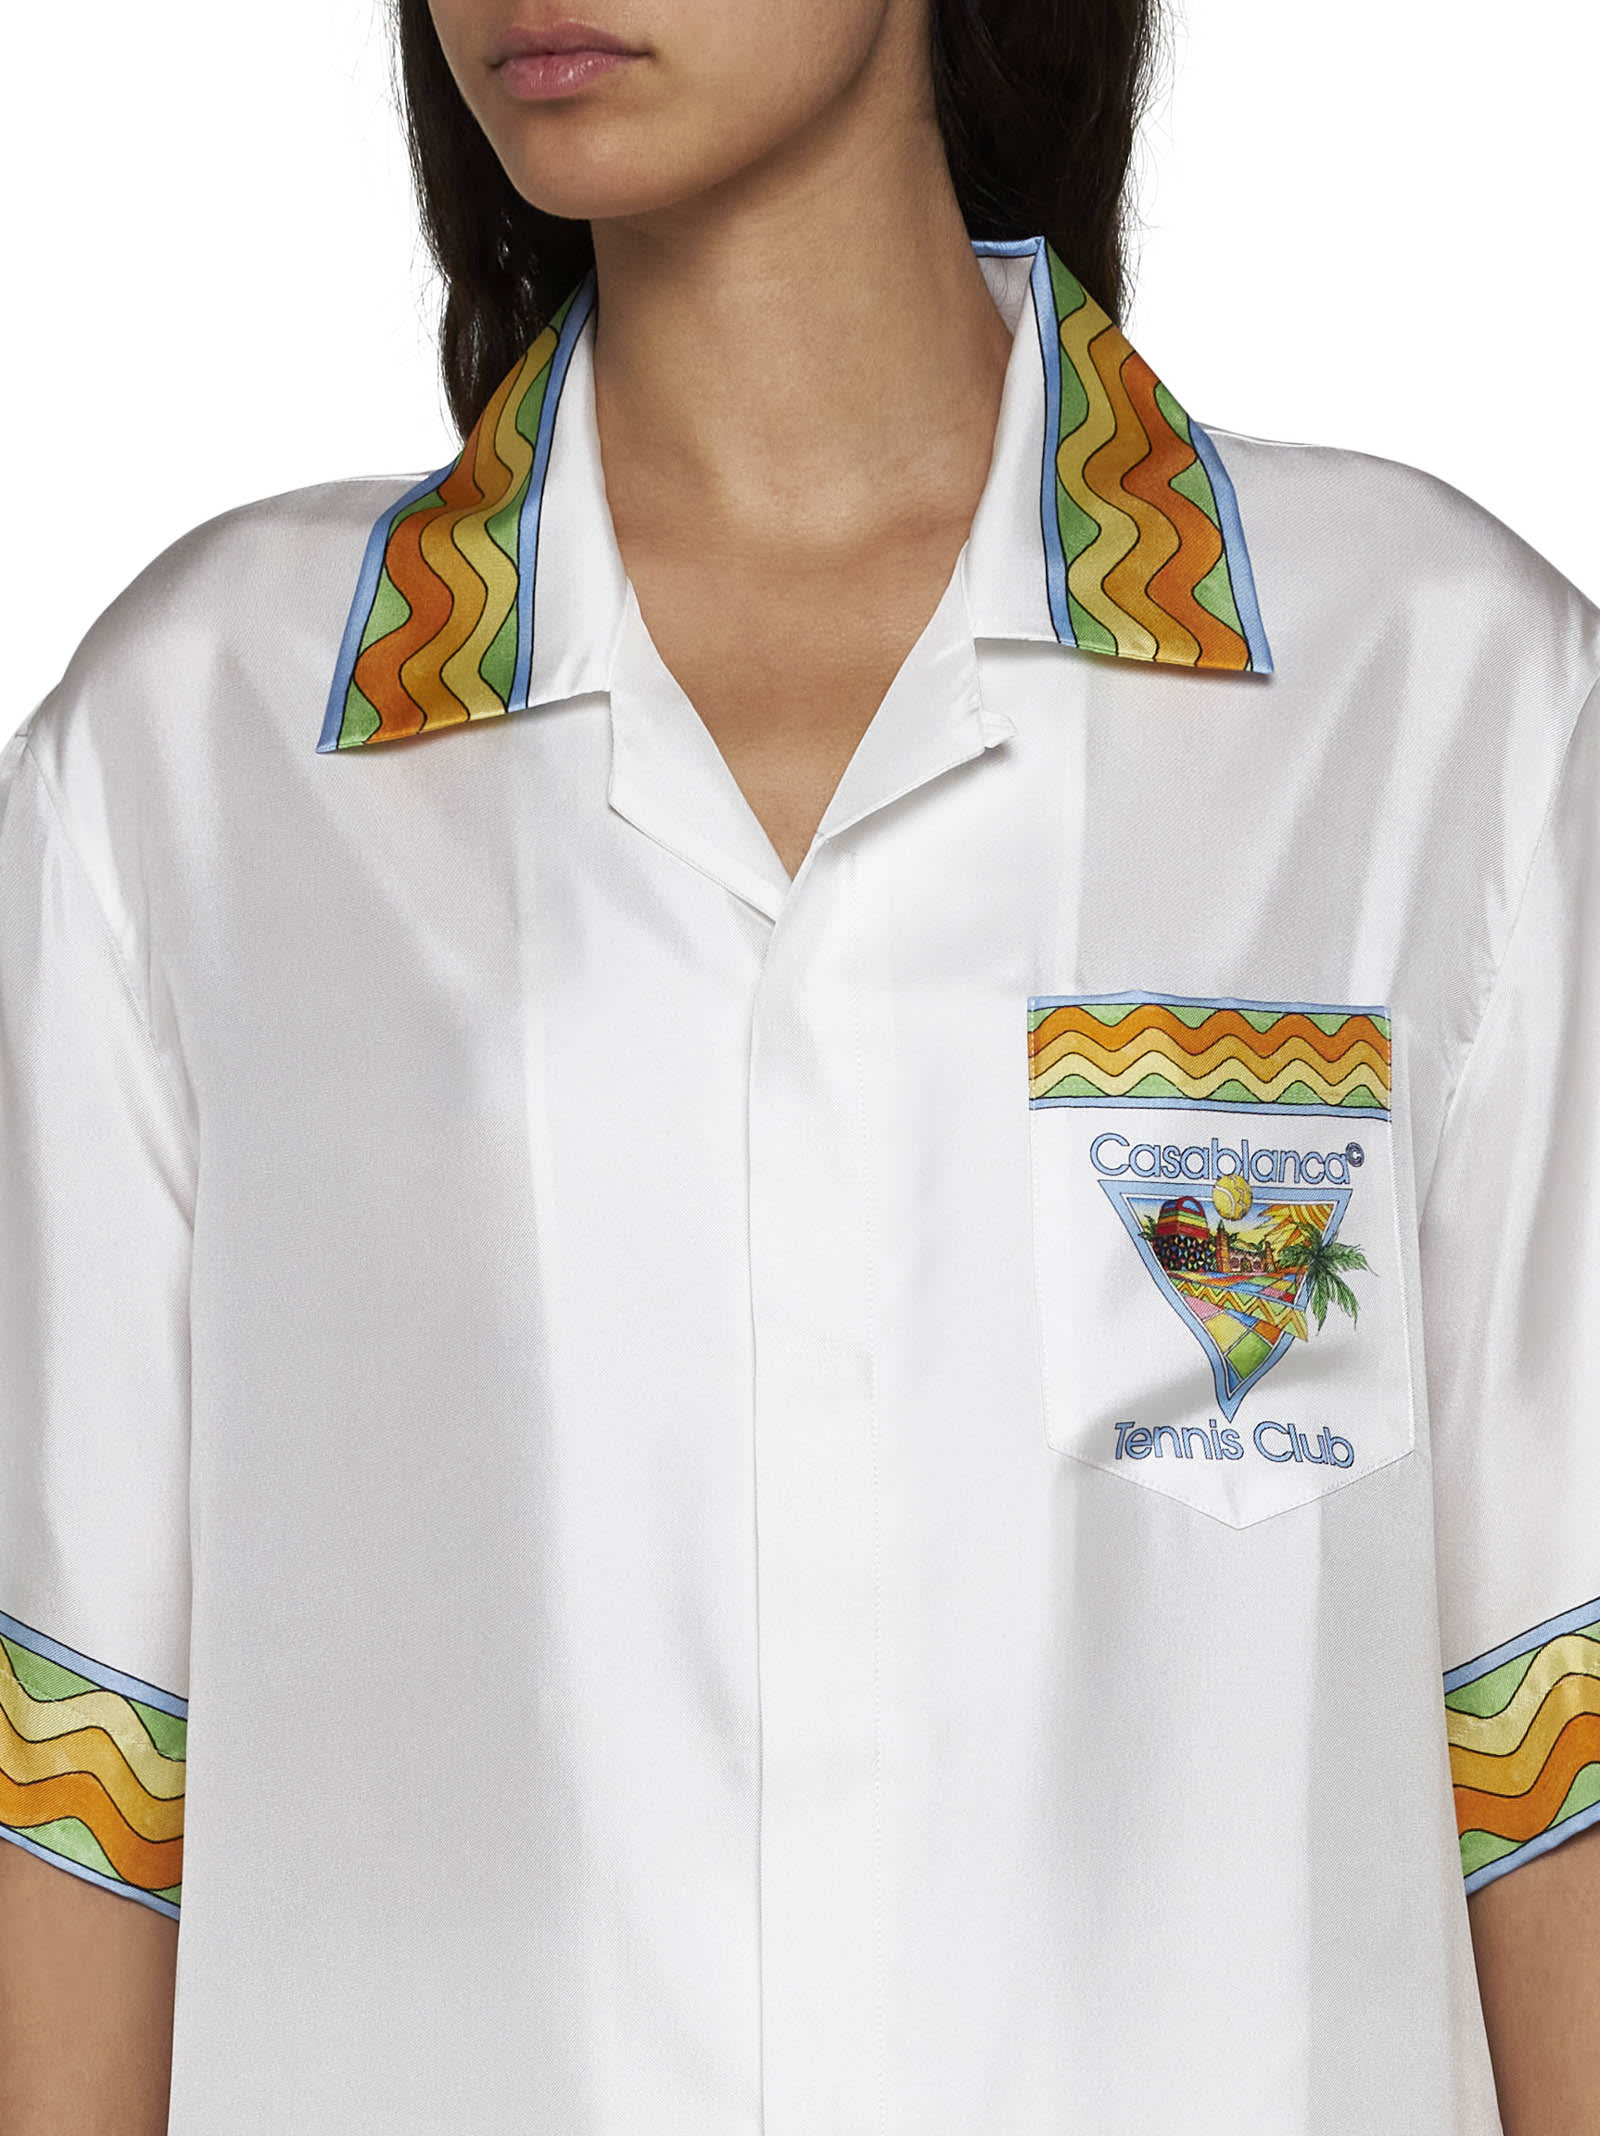 Shop Casablanca Shirt In Afro Cubism Tennis Club